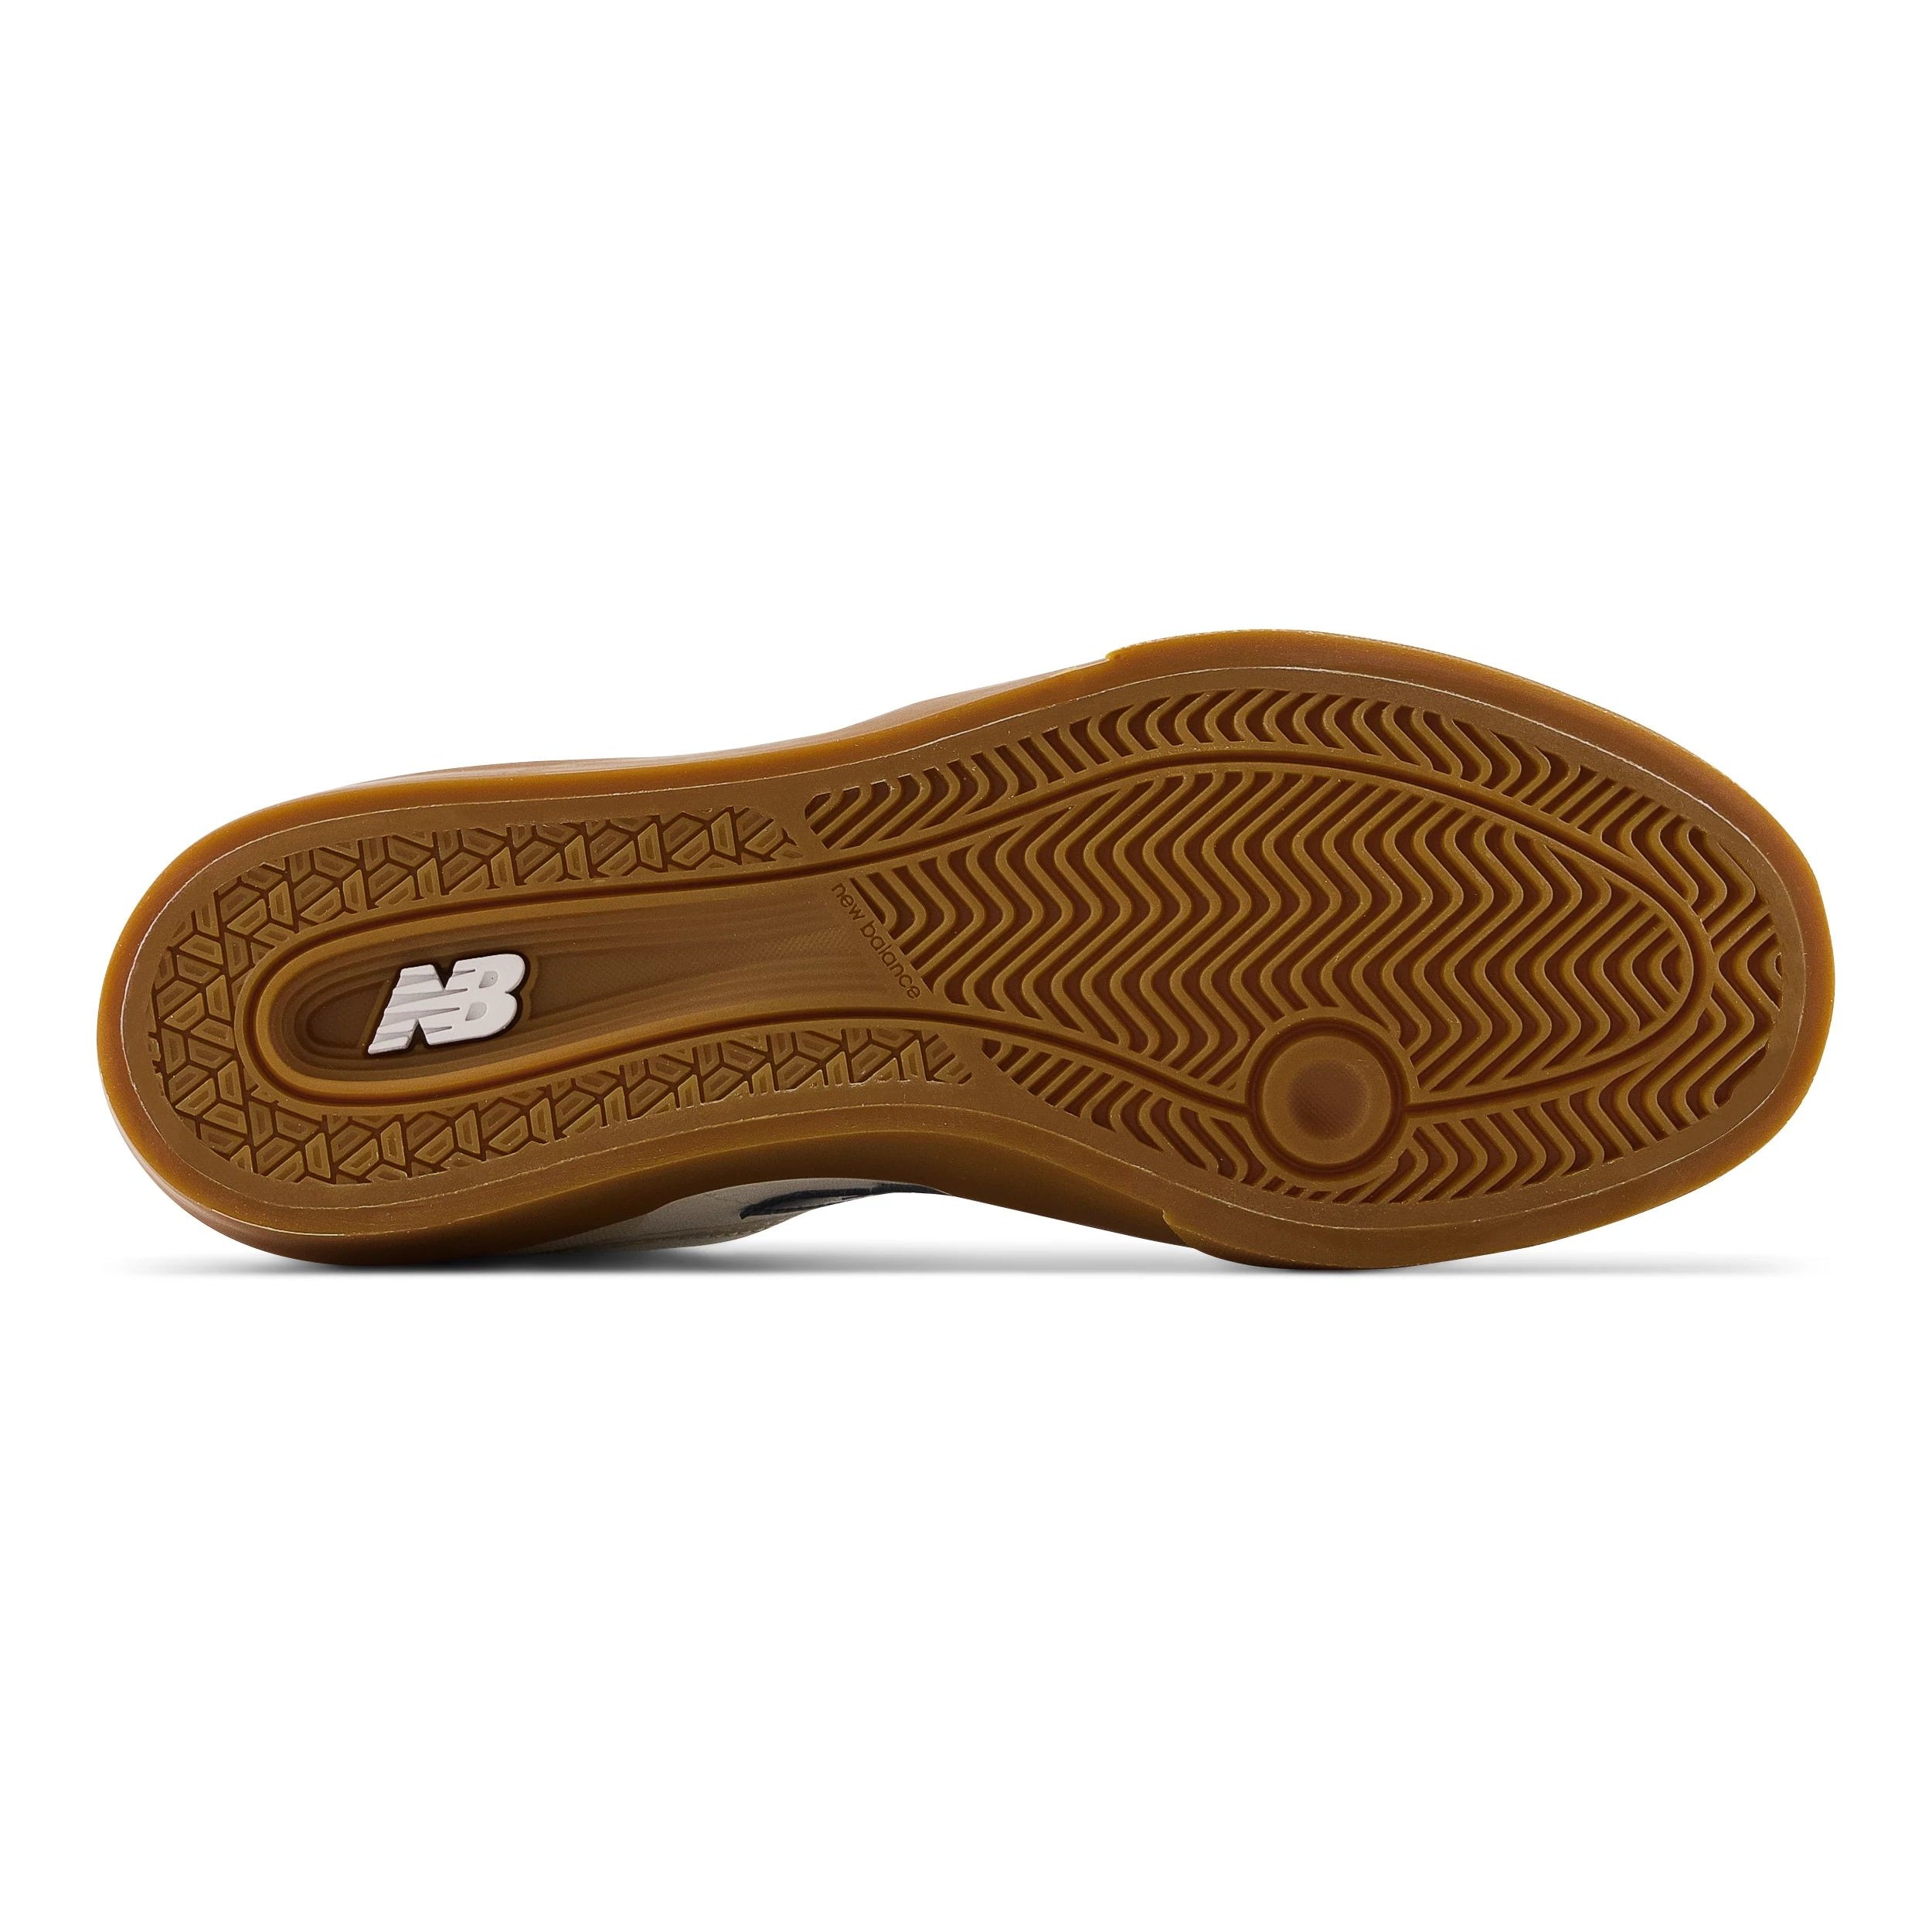 Sea Salt/Navy NM272 NB Numeric Skate Shoe Bottom